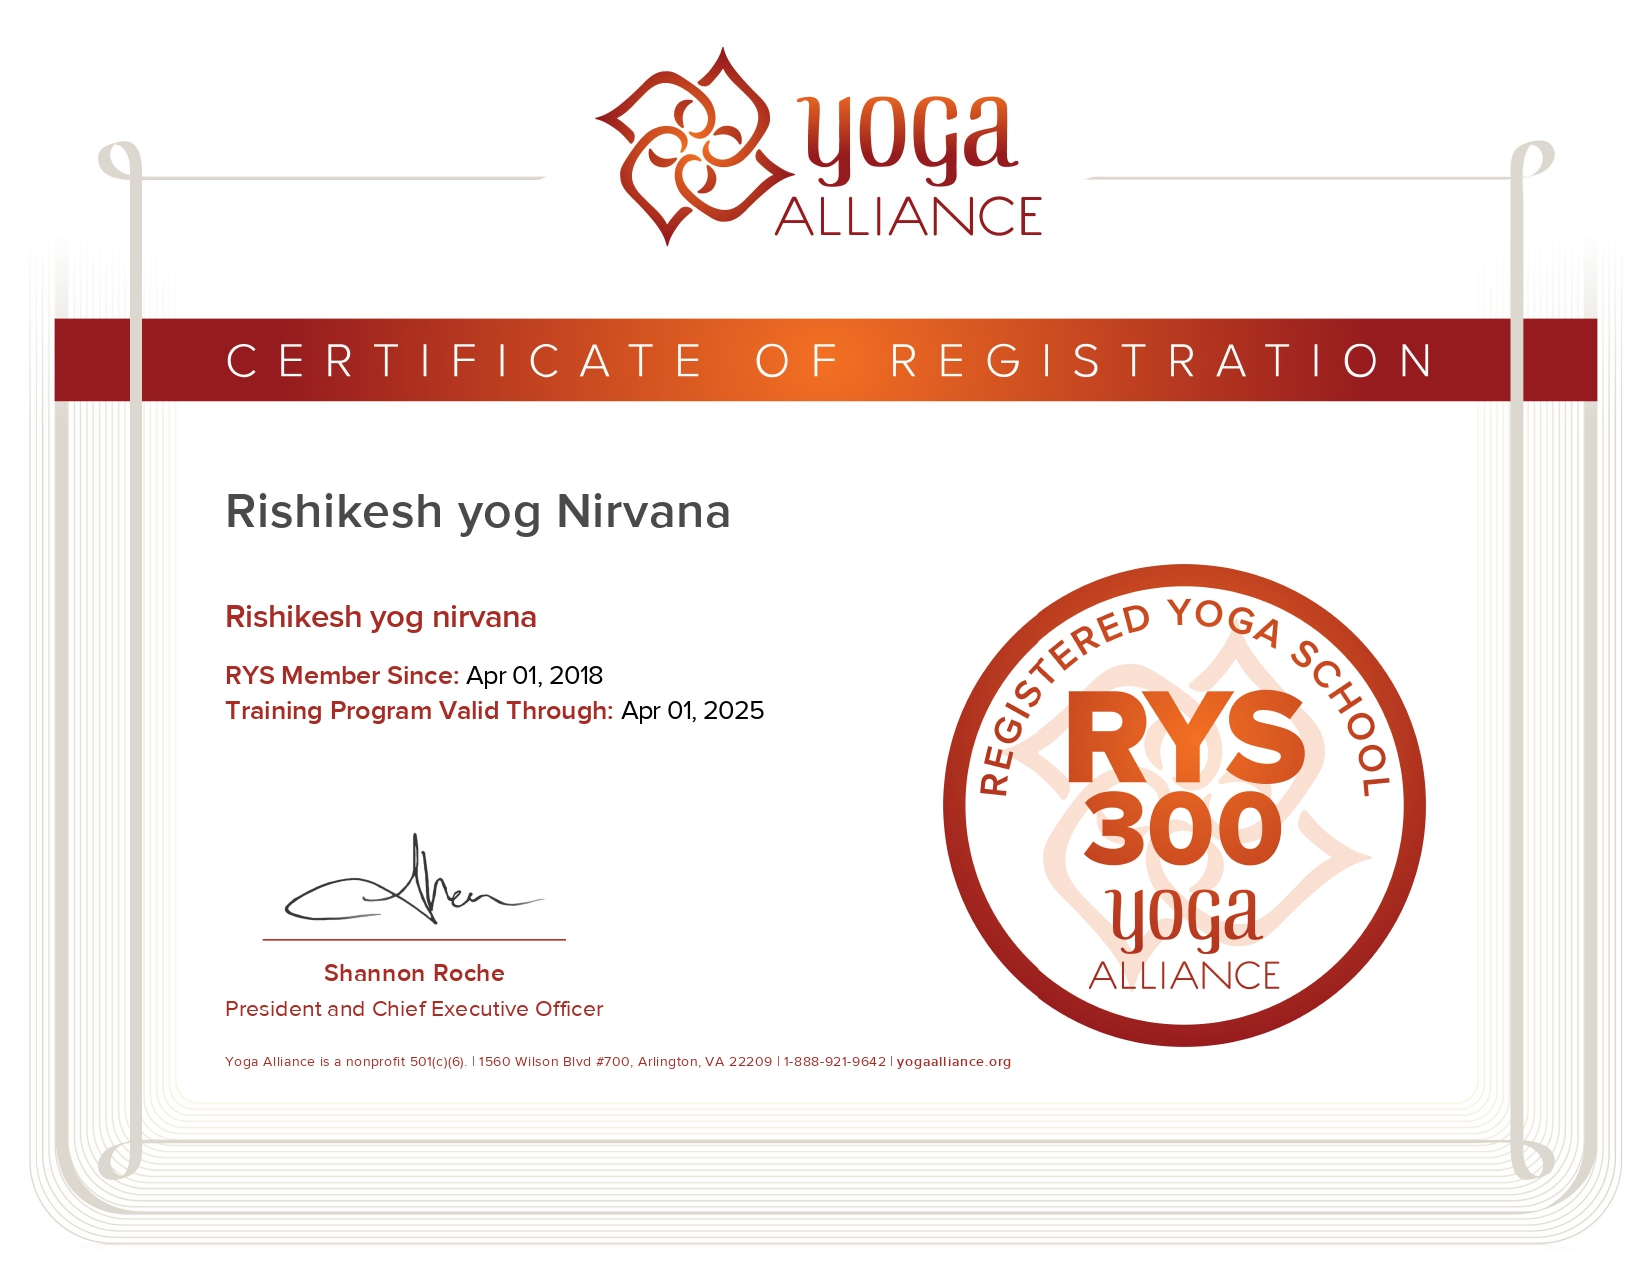 Rishikesh Yog Nirvana RYS 200 Yoga Alliance Certification